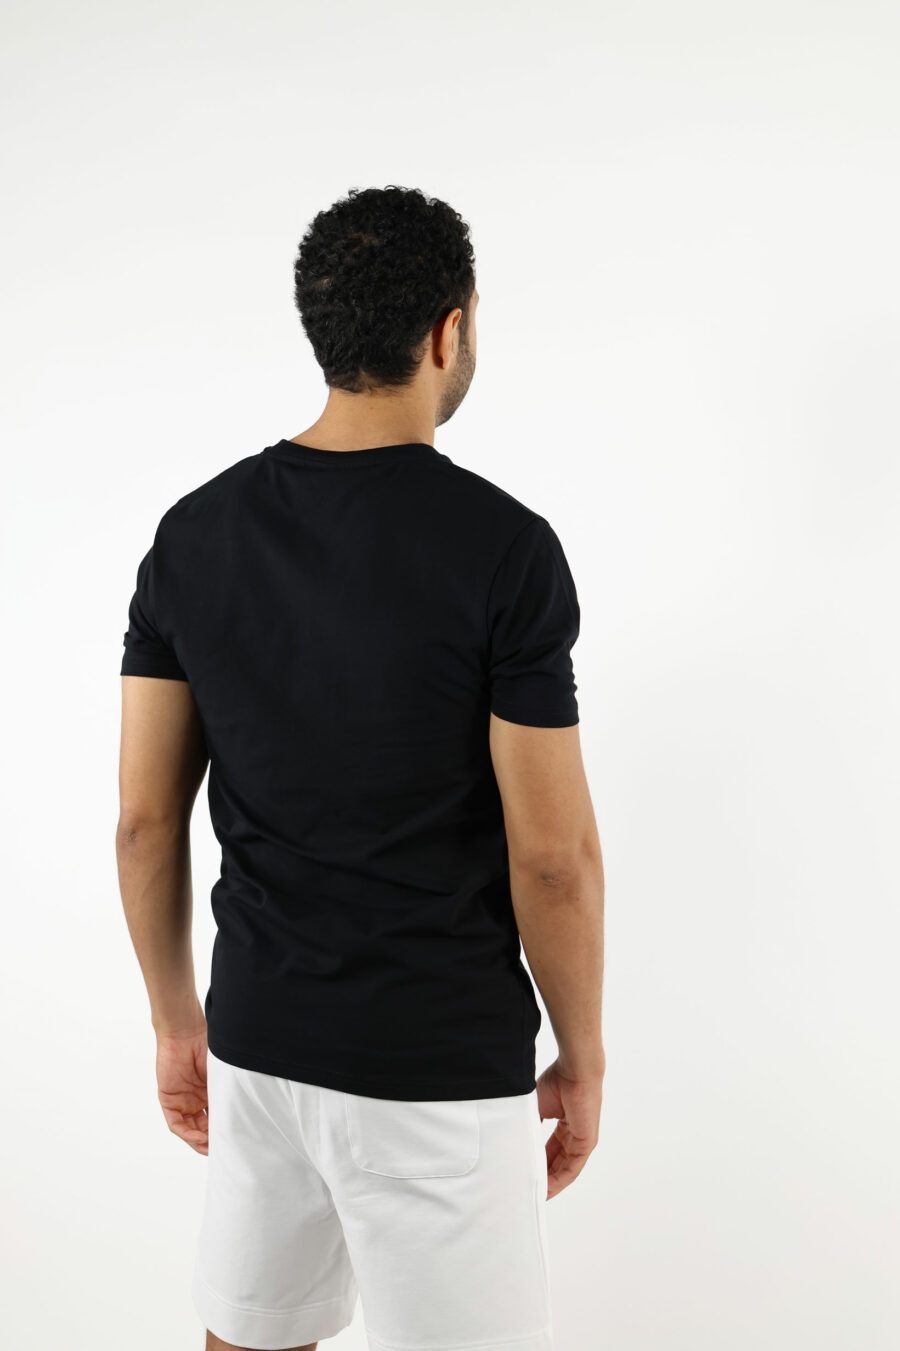 T-shirt black with mini logo bear patch "underbear" - 111036